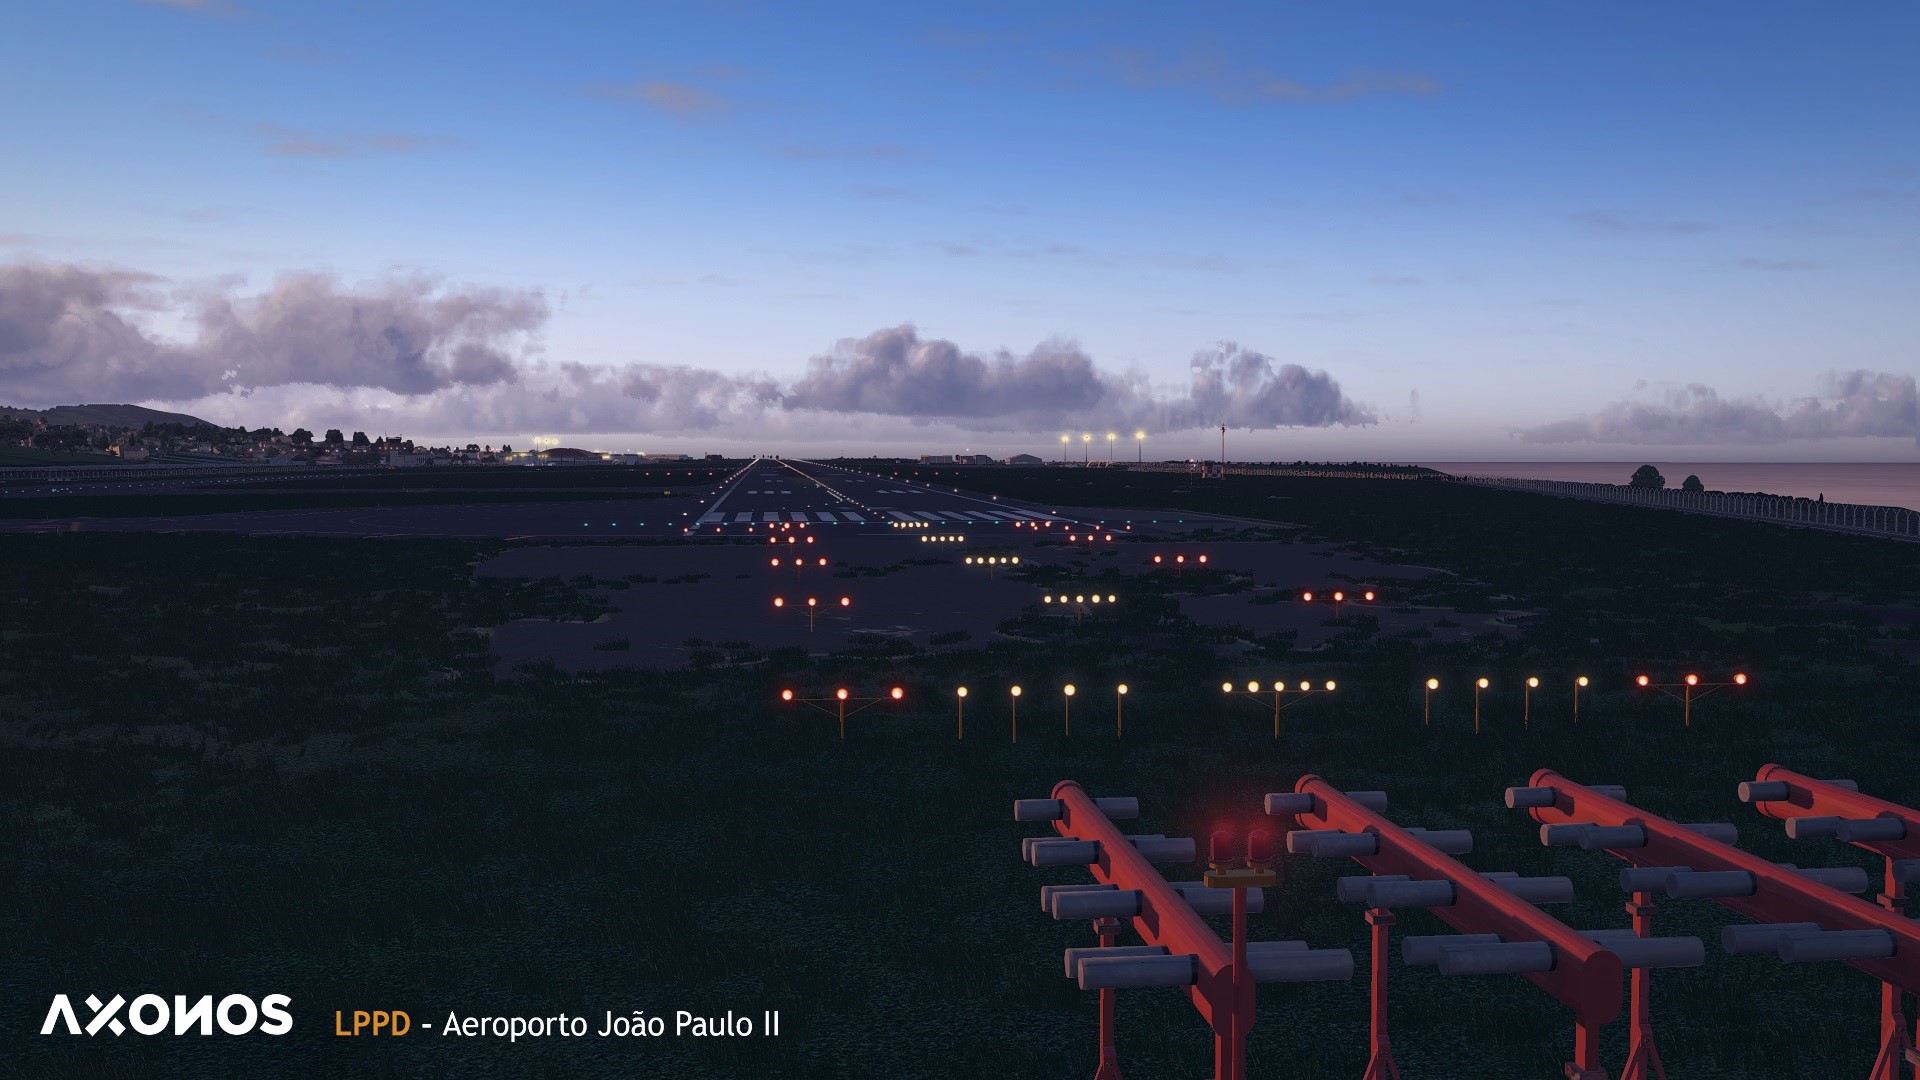 Axonos Publishes Development Update Covering New Products - Axonos, Microsoft Flight Simulator